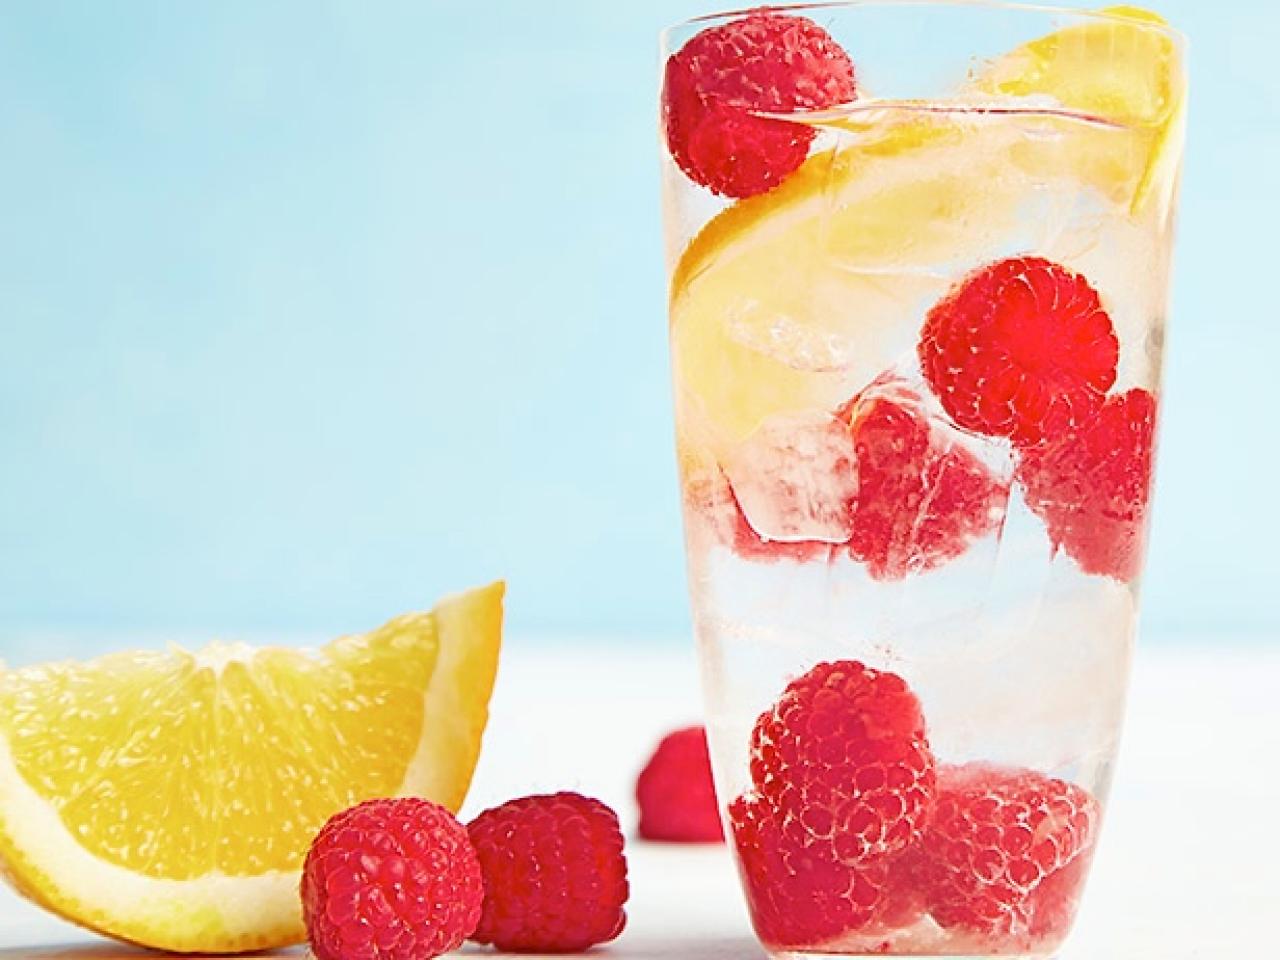 Raspberry-infused beverages